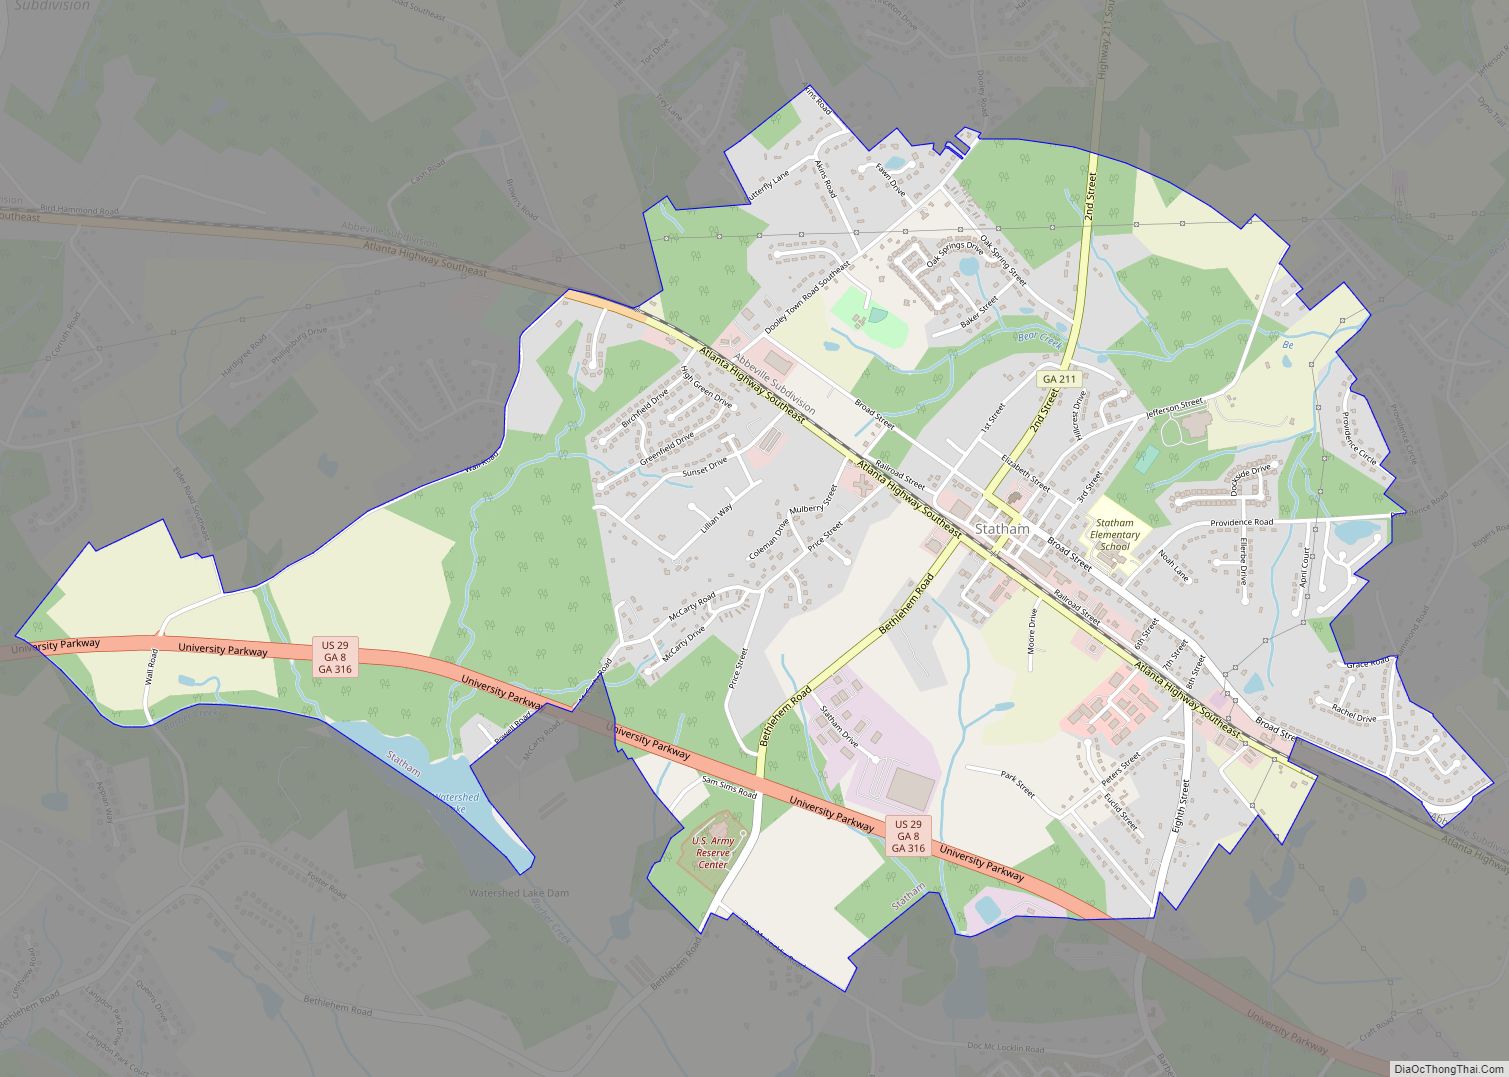 Map of Statham city